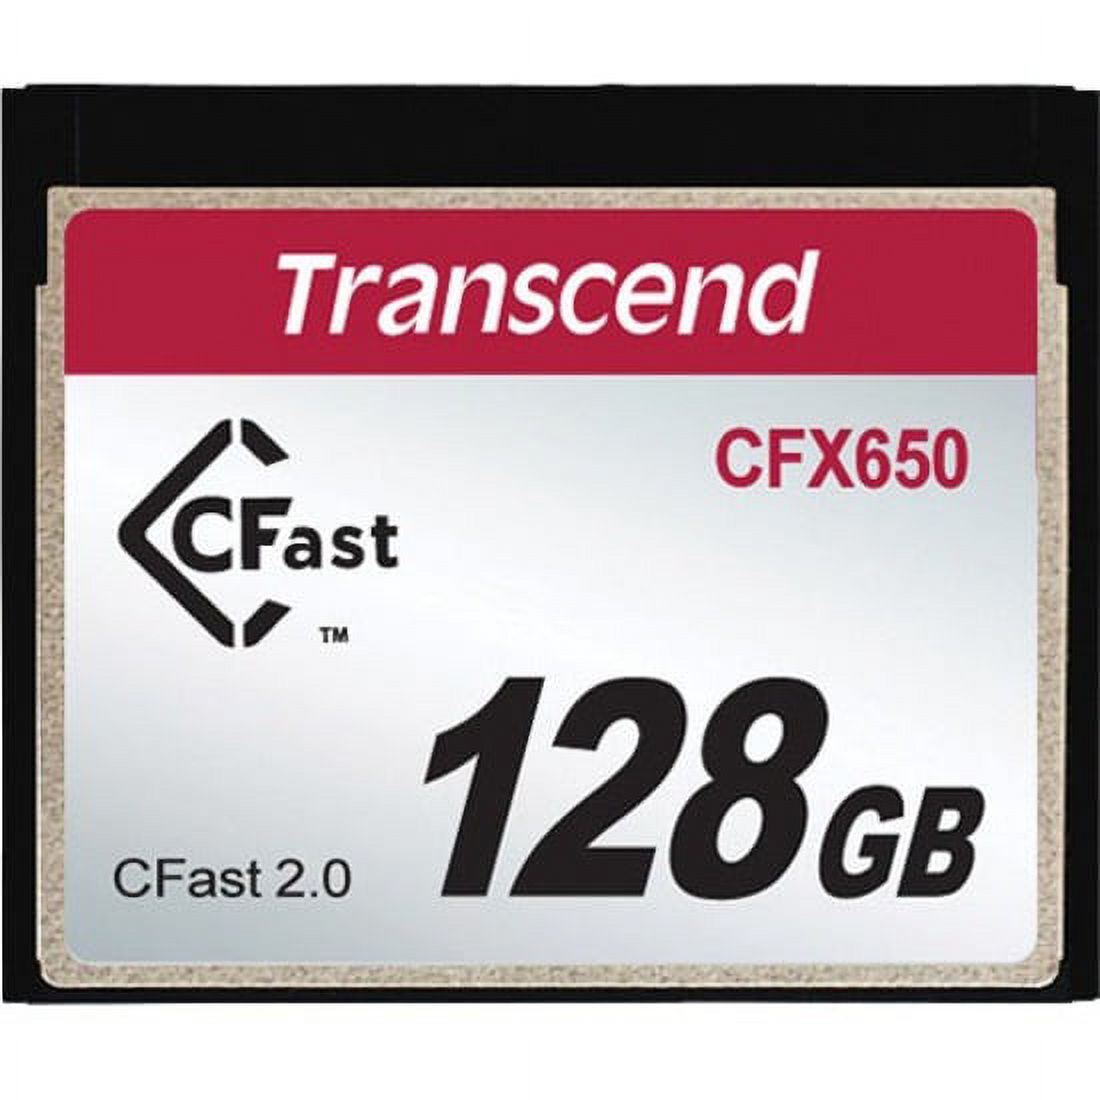 Transcend 128 GB CFast Card - image 1 of 2